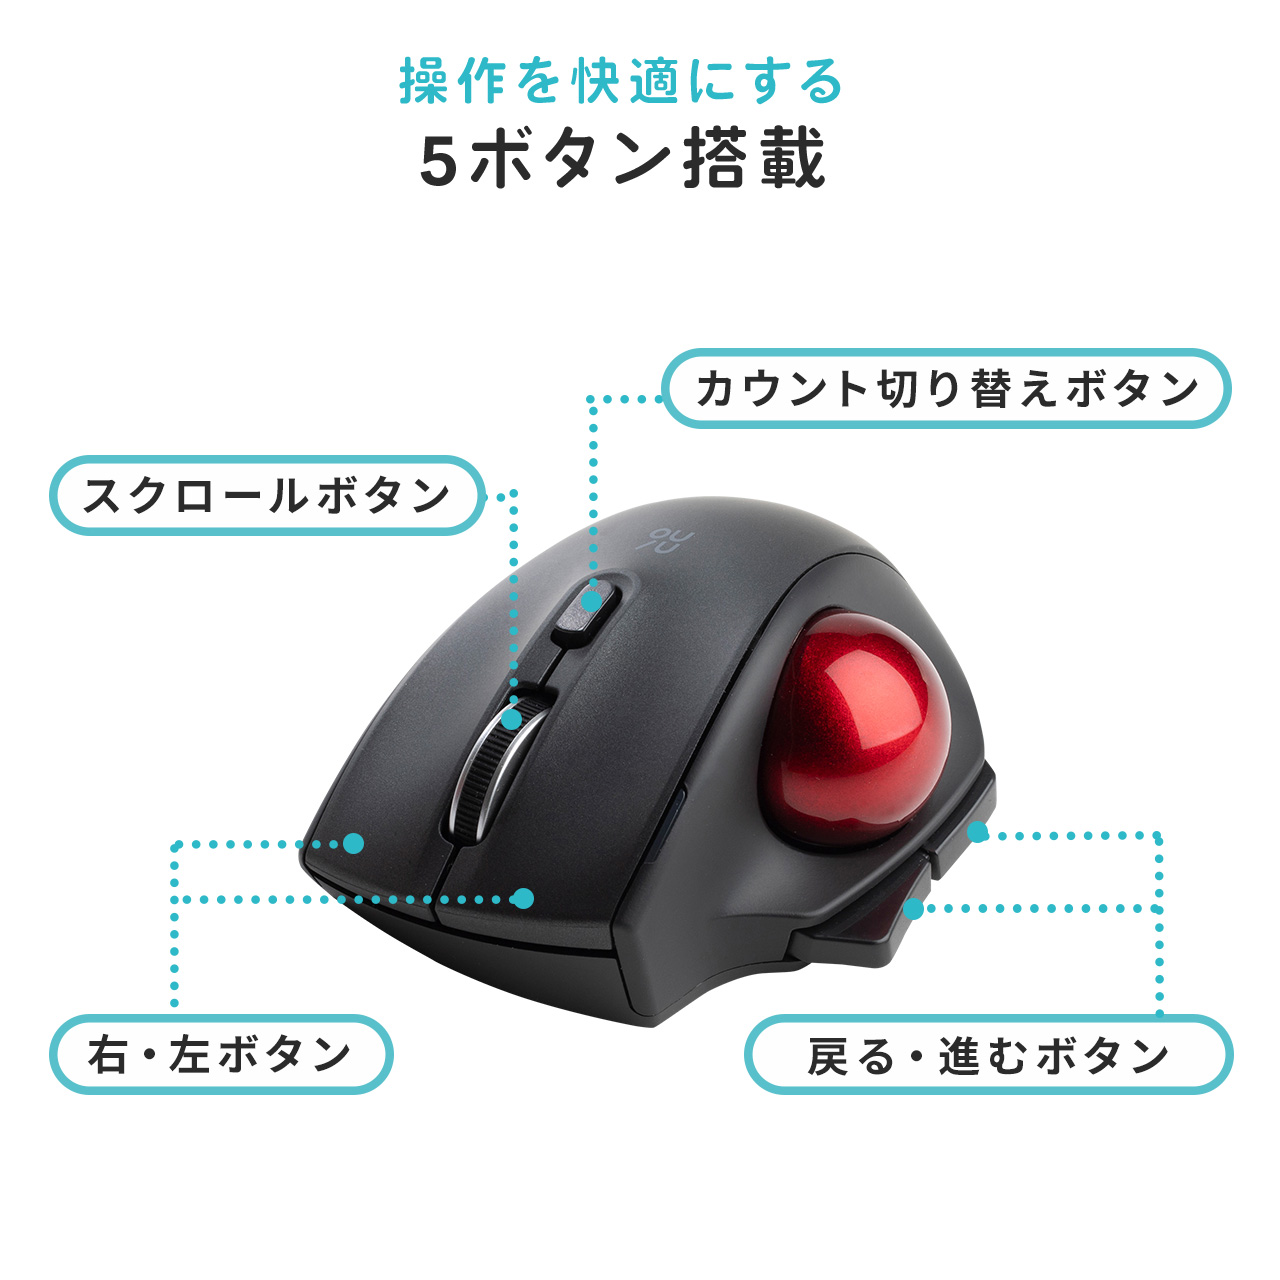 Nakabayashi トラックボール ホワイト ワイヤレス USB 5ボタン 光学式 